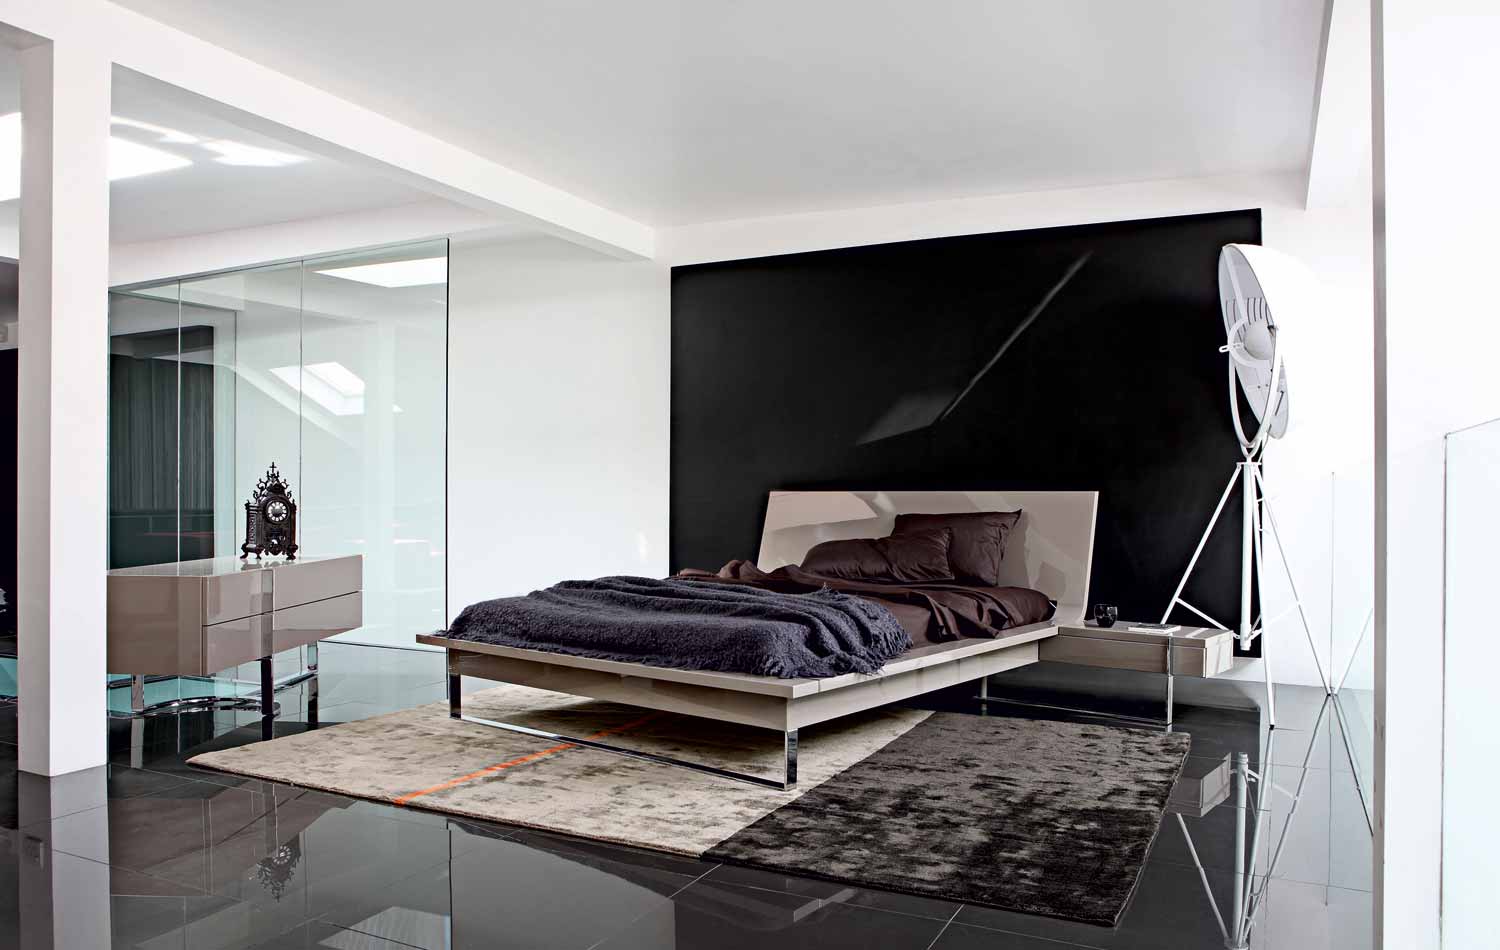 Bedroom Inspiration: 20 Modern Beds By Roche Bobois